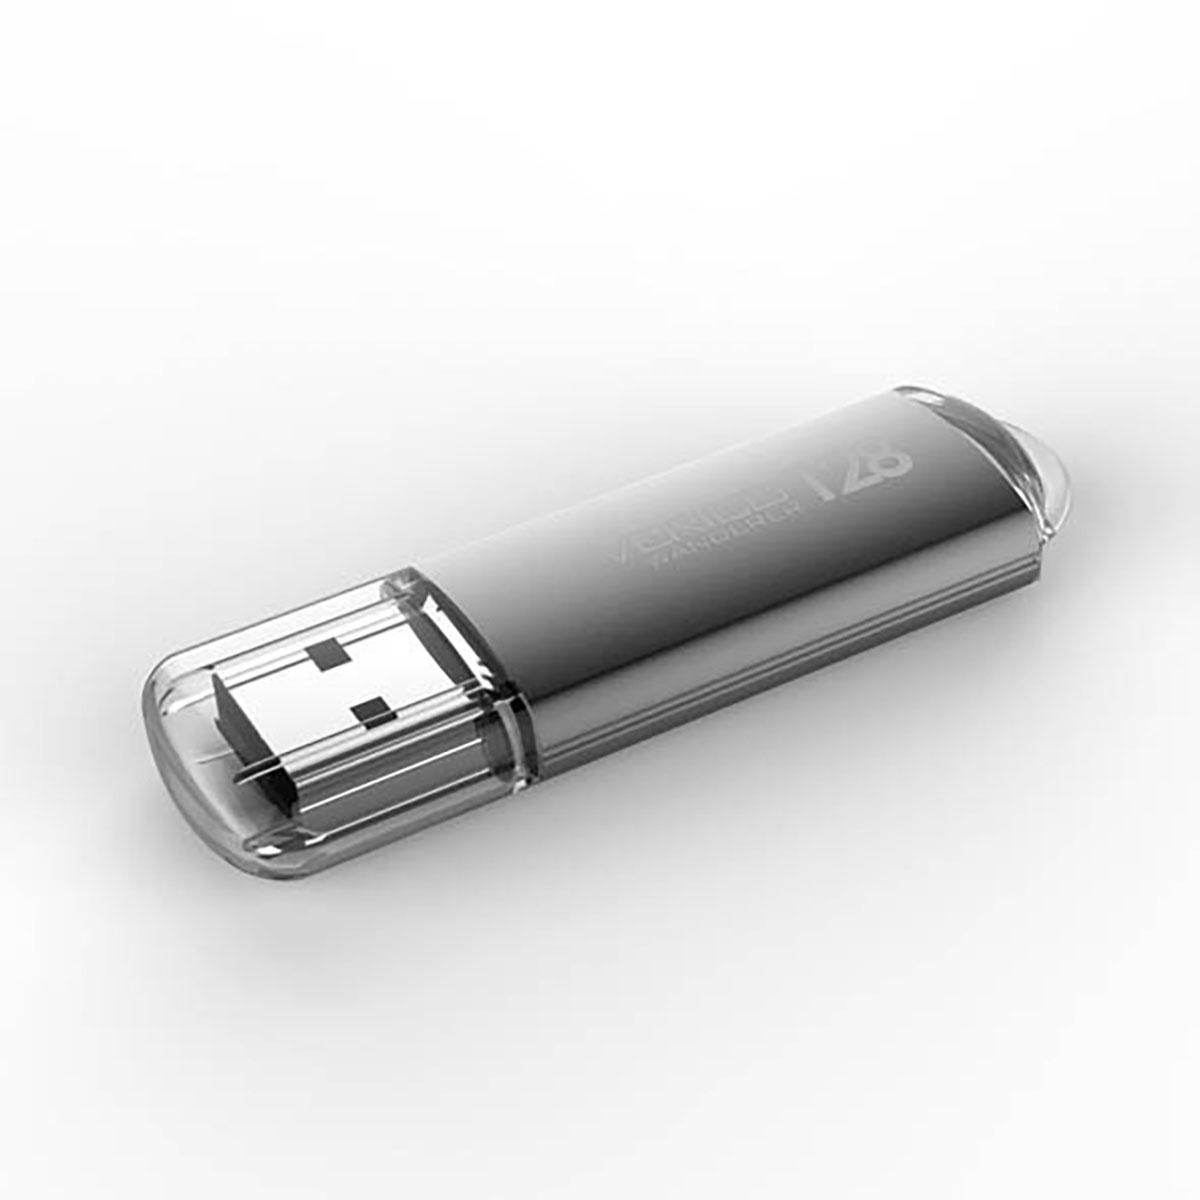 MEMORIA USB VERICO (1UDOV-M4BK83-NN) 8GB WANDERERVM04L, METALICO NEGRO, USB2.0 - 1UDOV-M4BK83-NN